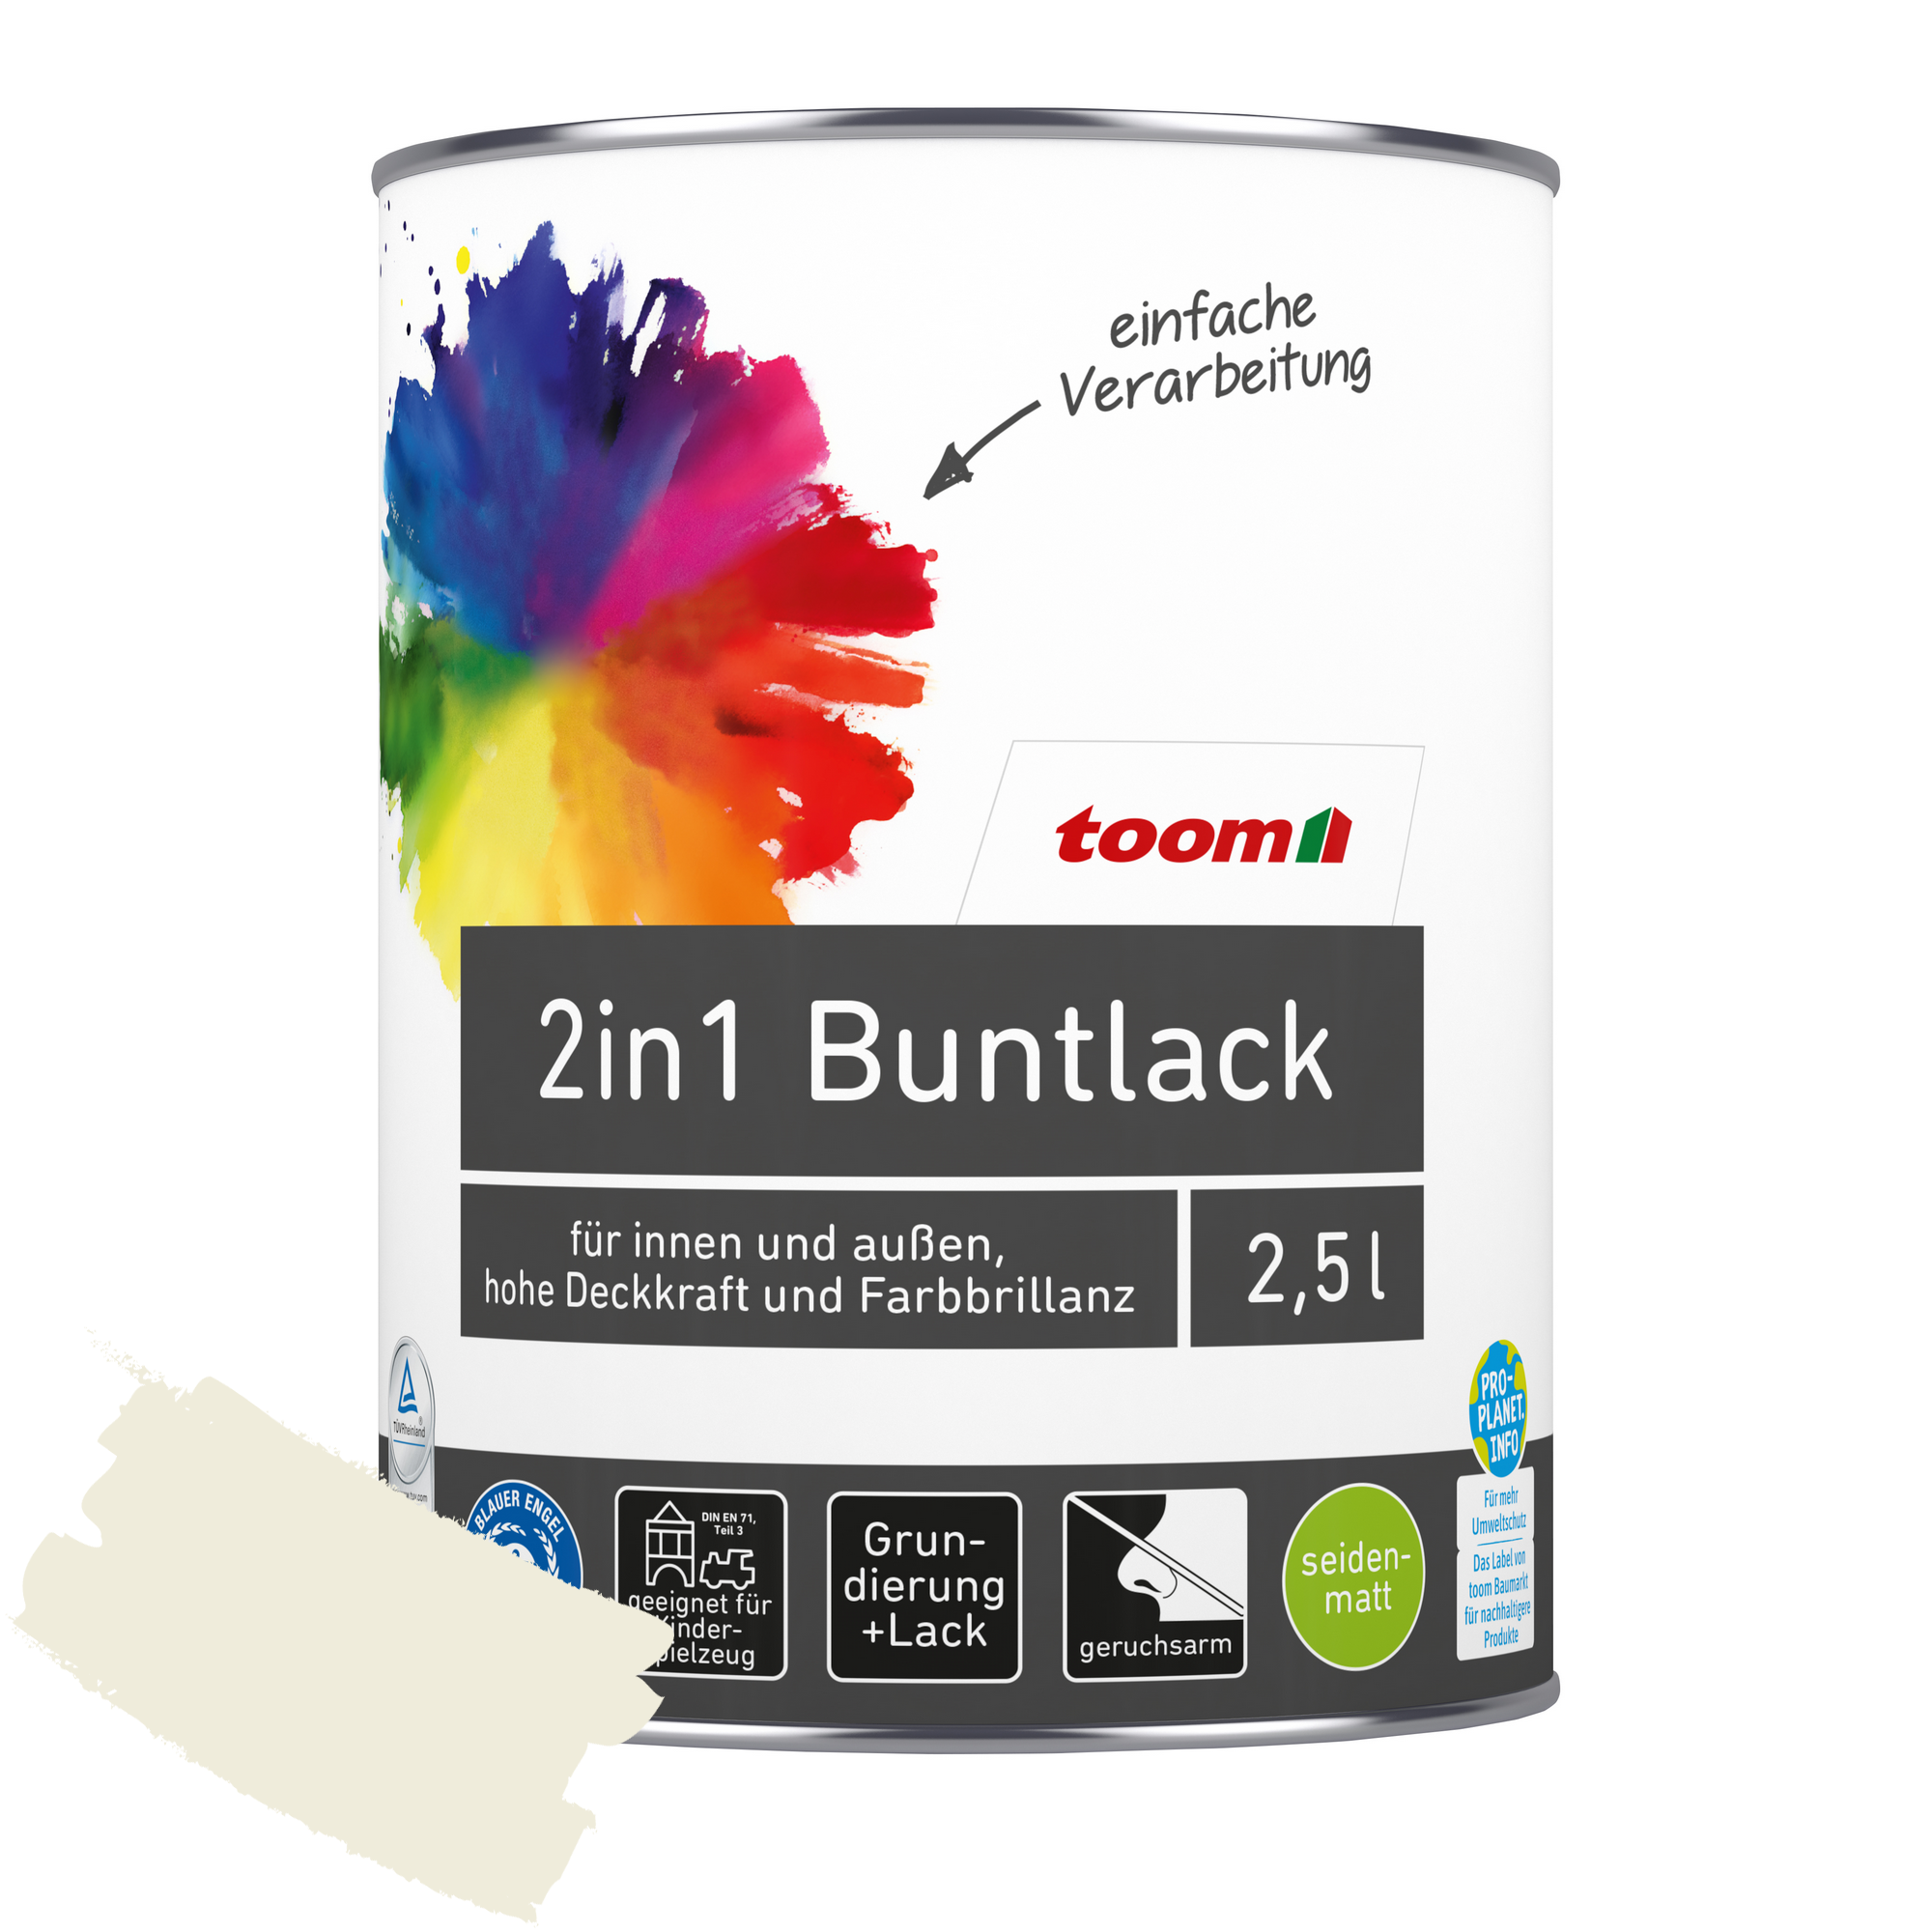 2in1 Buntlack 'Eisblume' reinweiß seidenmatt 2,5 l + product picture